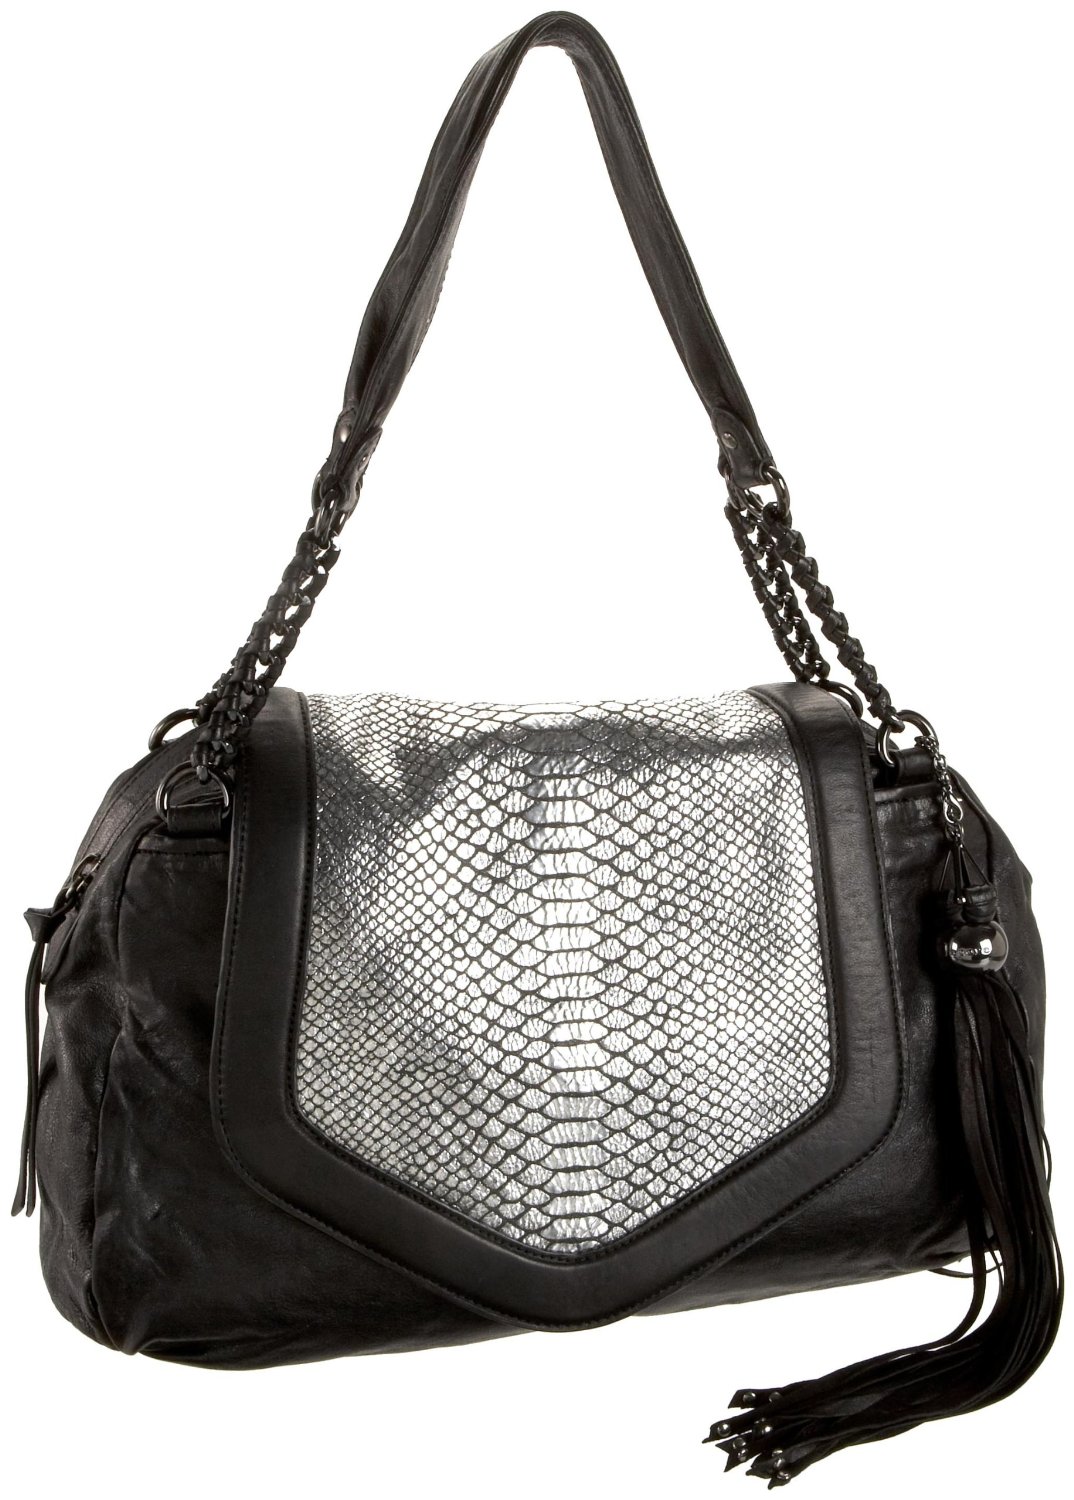 Nanette Lepore Handbags Contrast Cobra Embossed Flap Satchel in Black